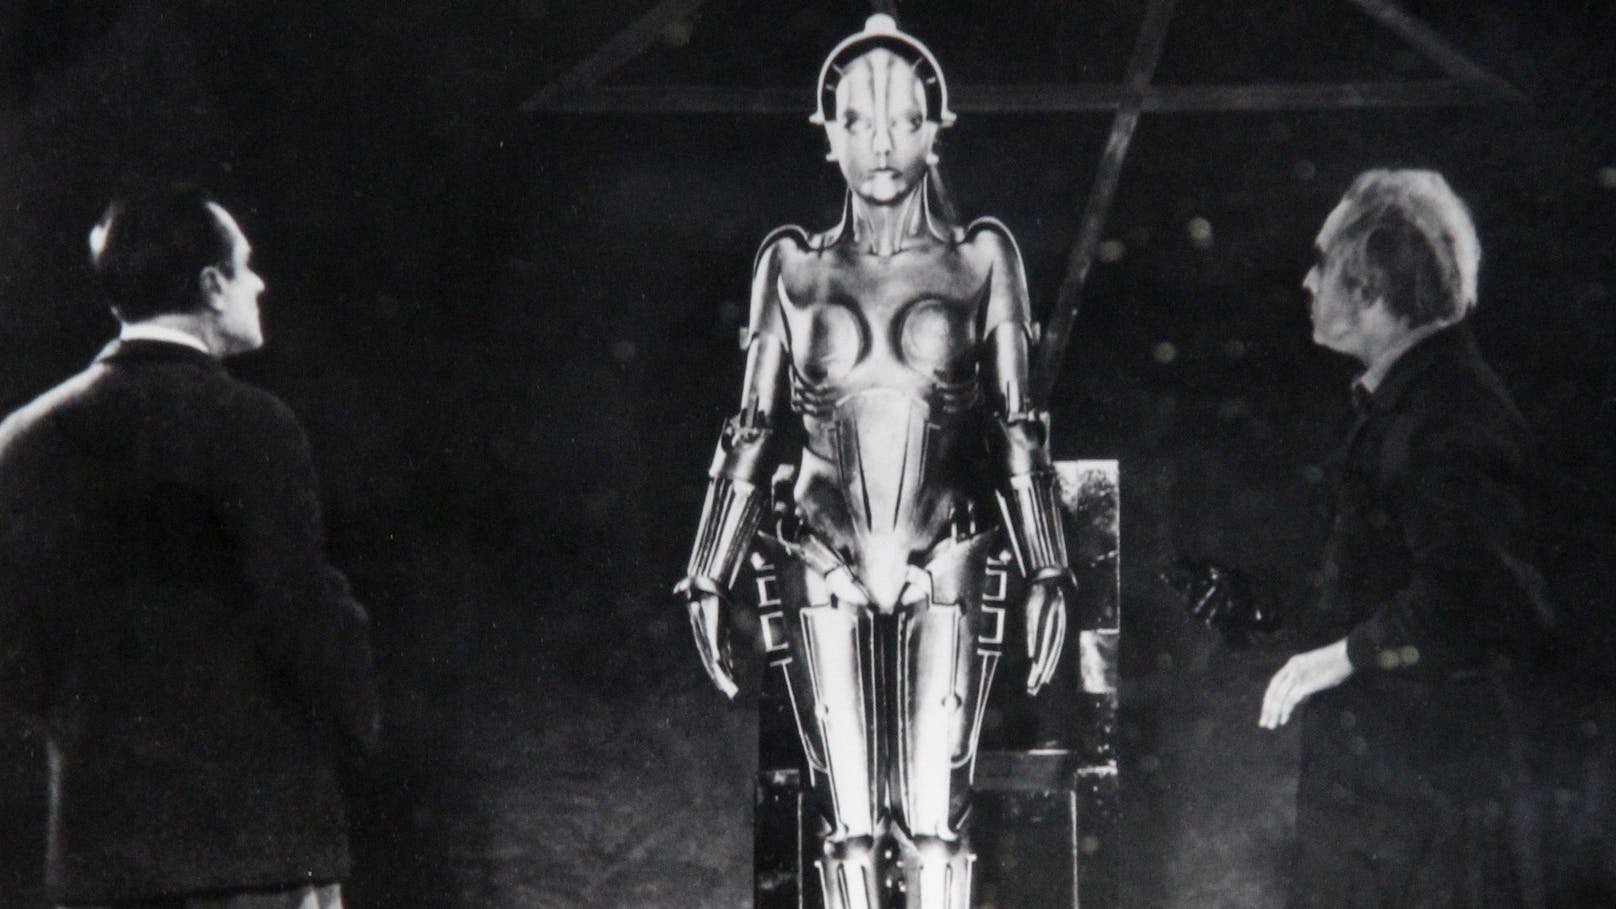 Maschinenmensch aus Fritz Langs Science-Fiction-Film "Metropolis" (1922).